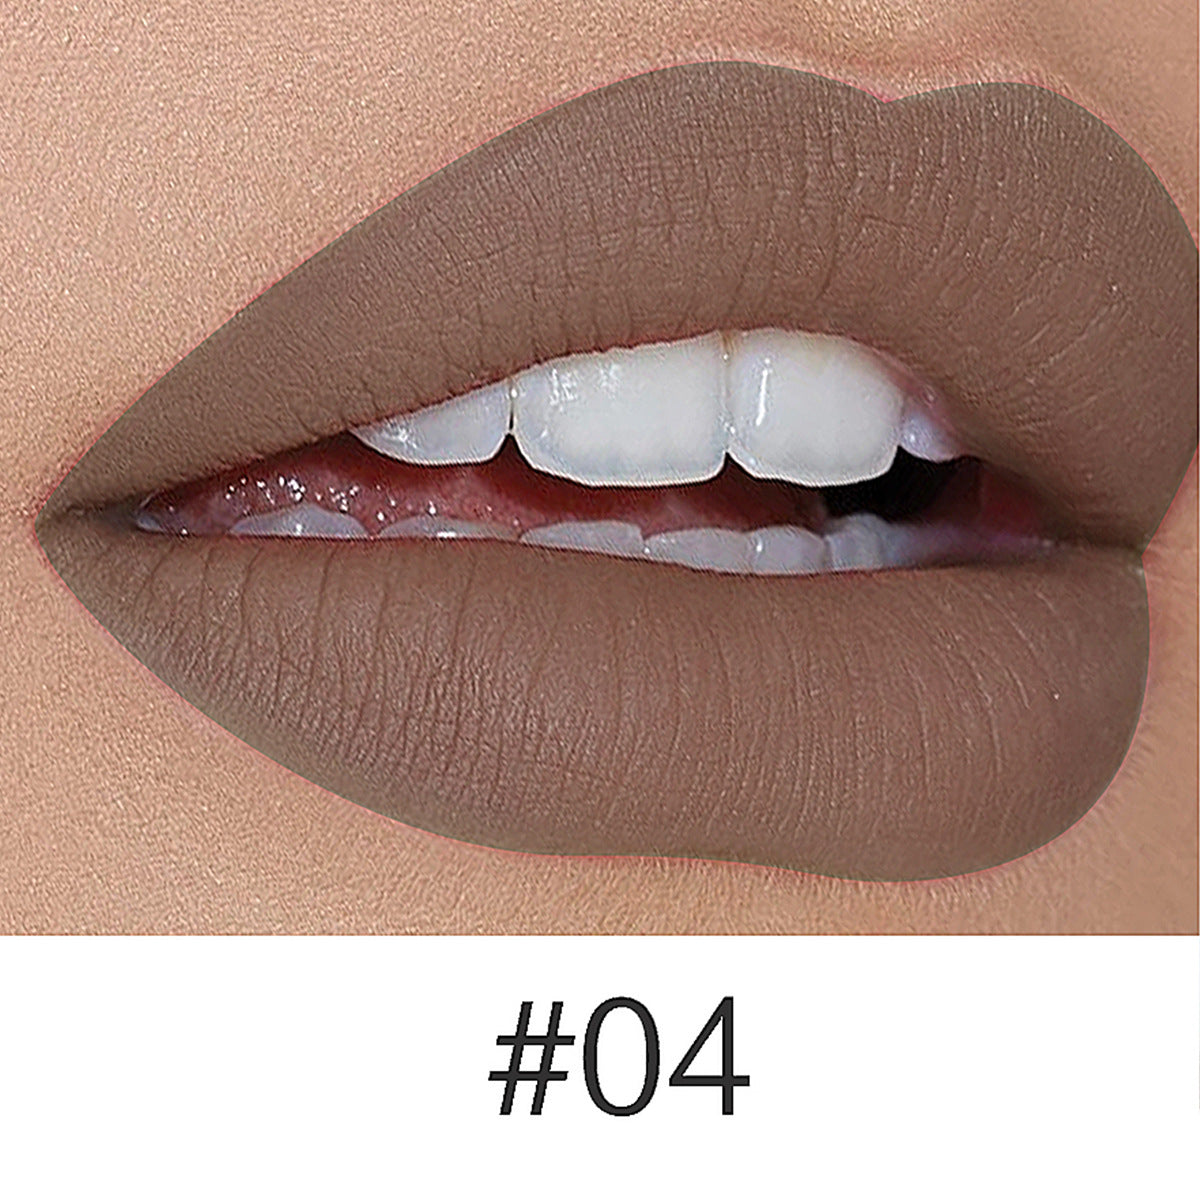 50 Farben Lipgloss Make-up Kiss Free Cosmetics Benutzerdefinierter wasserfester samtiger Nude Matte flüssiger Lippenstift 